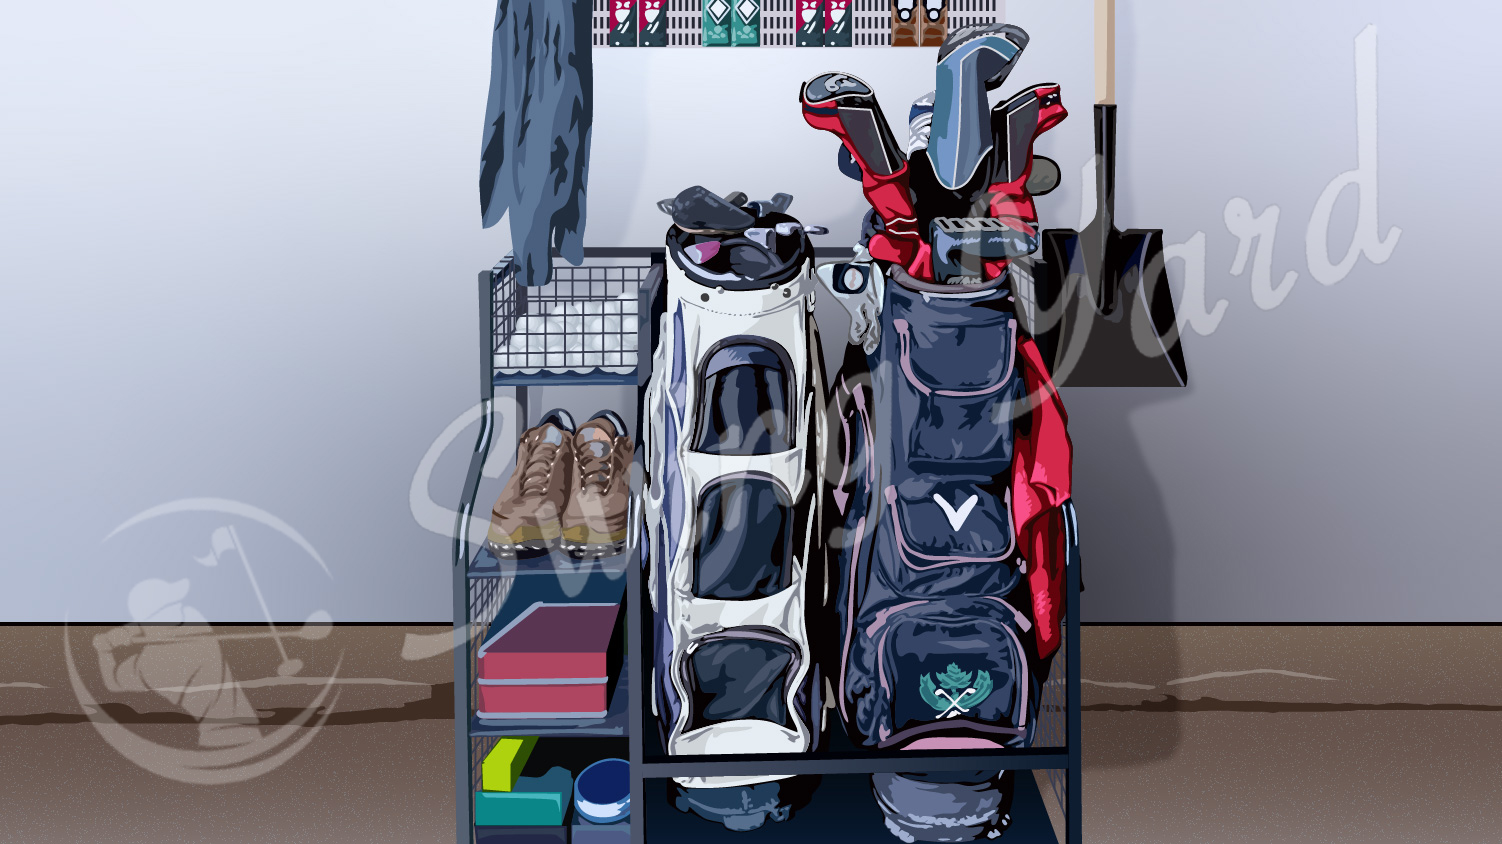 Organizing racks are handy for storing golf gear